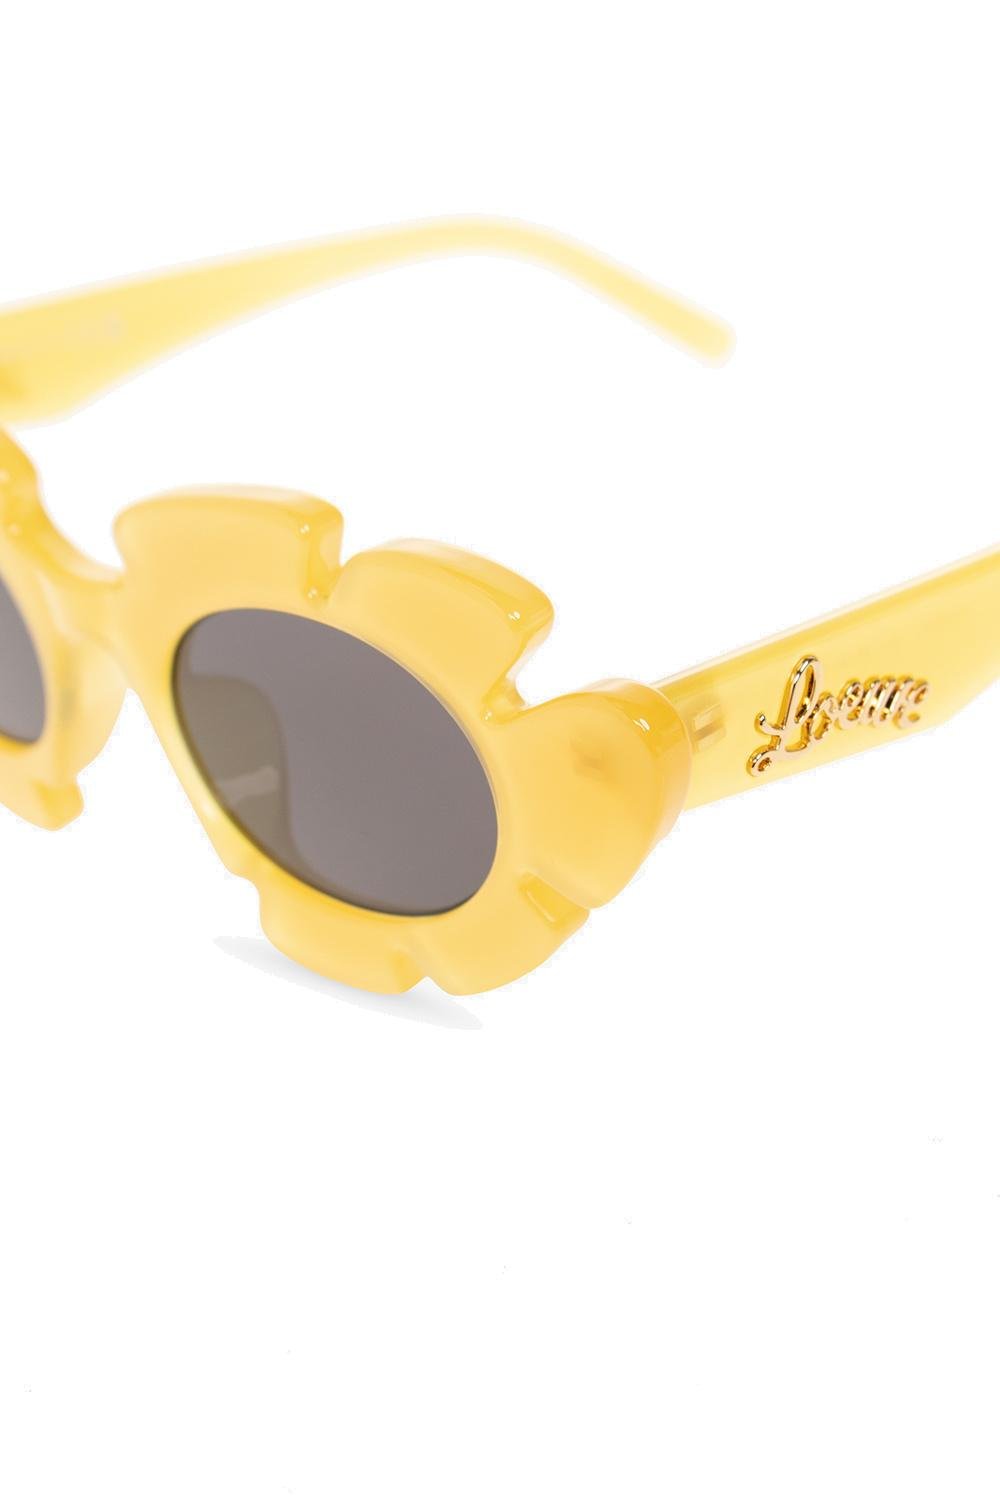 Loewe Flower Frame Sunglasses